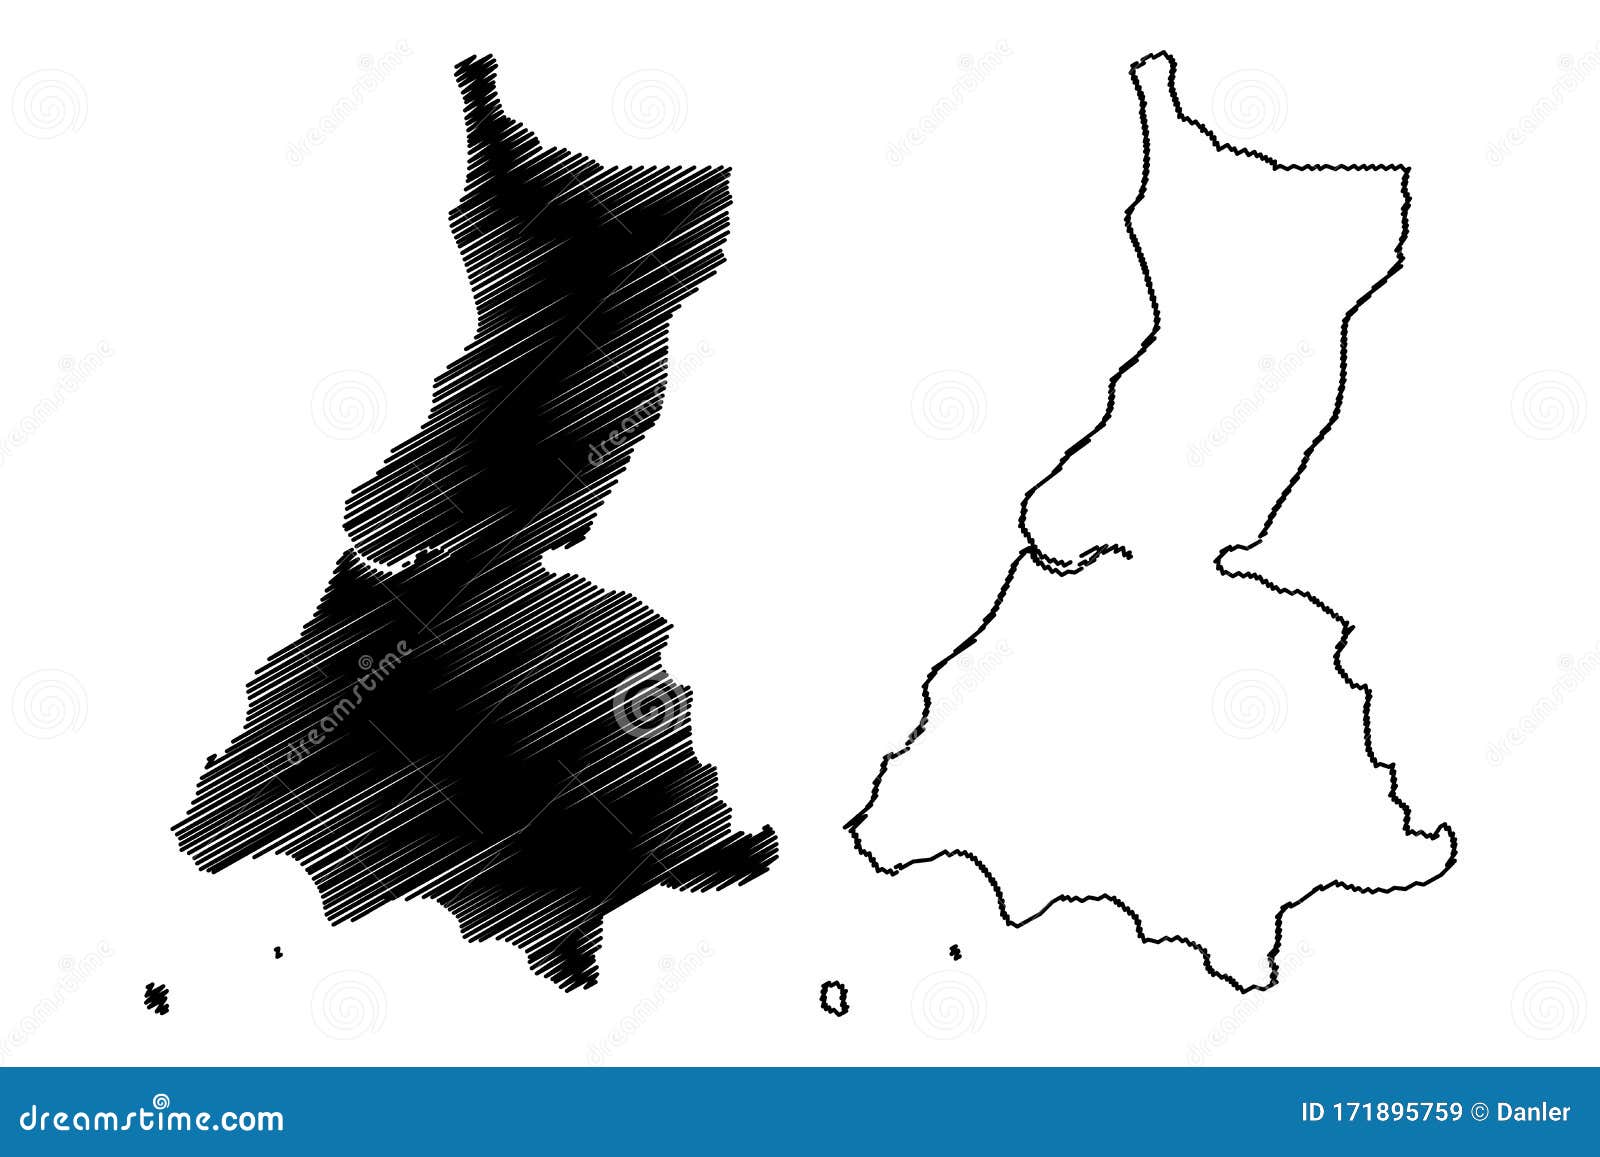 litoral republic of equatorial guinea, provinces of equatorial guinea map  , scribble sketch litoral province